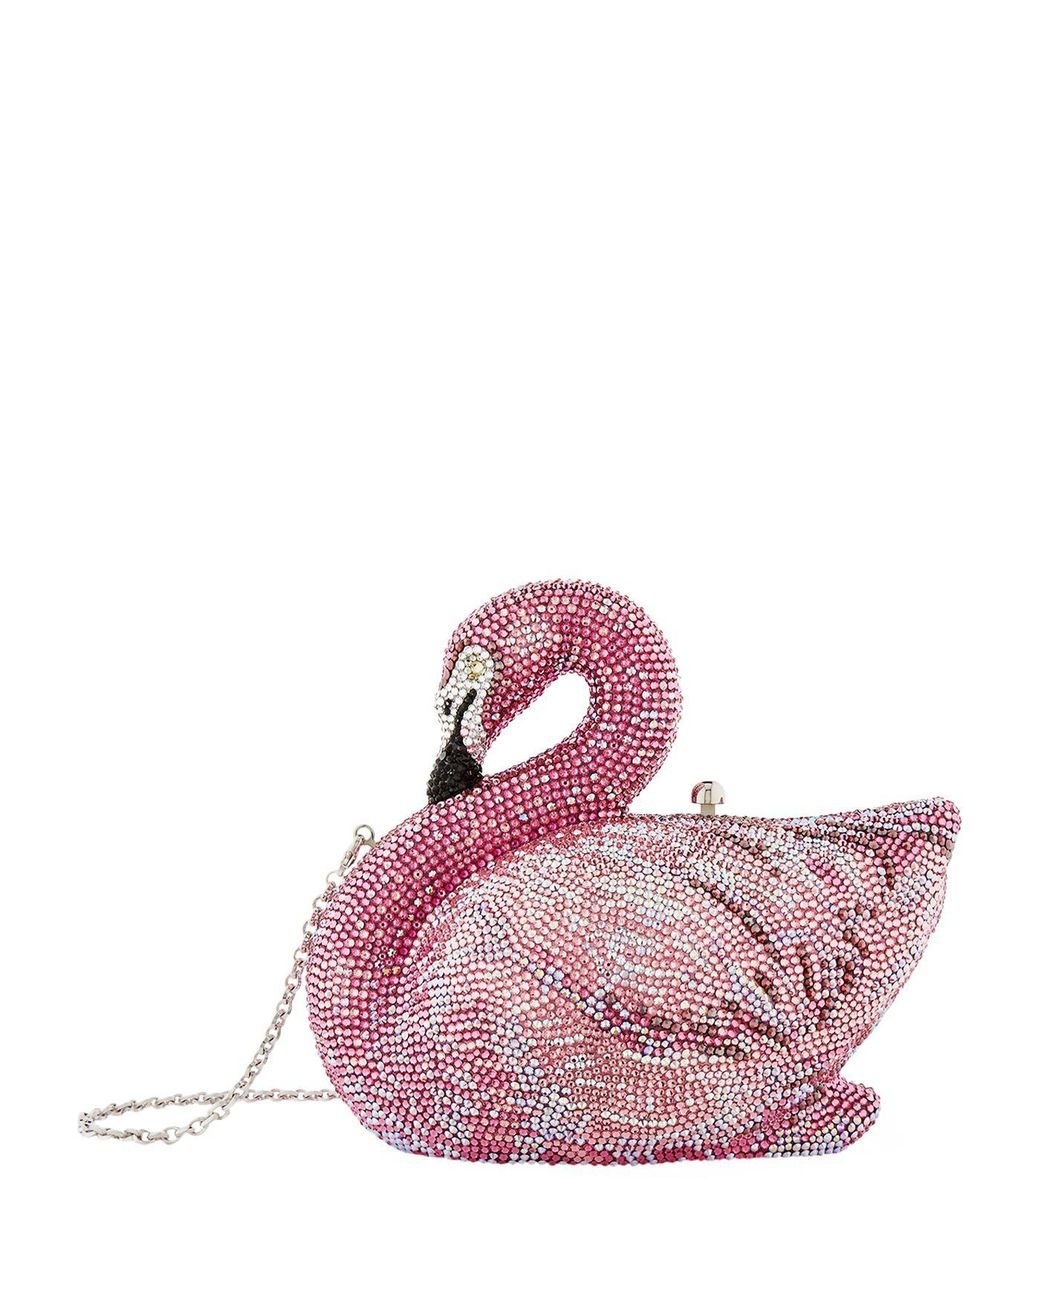 Judith Leiber Flamingo Clutch in Pink